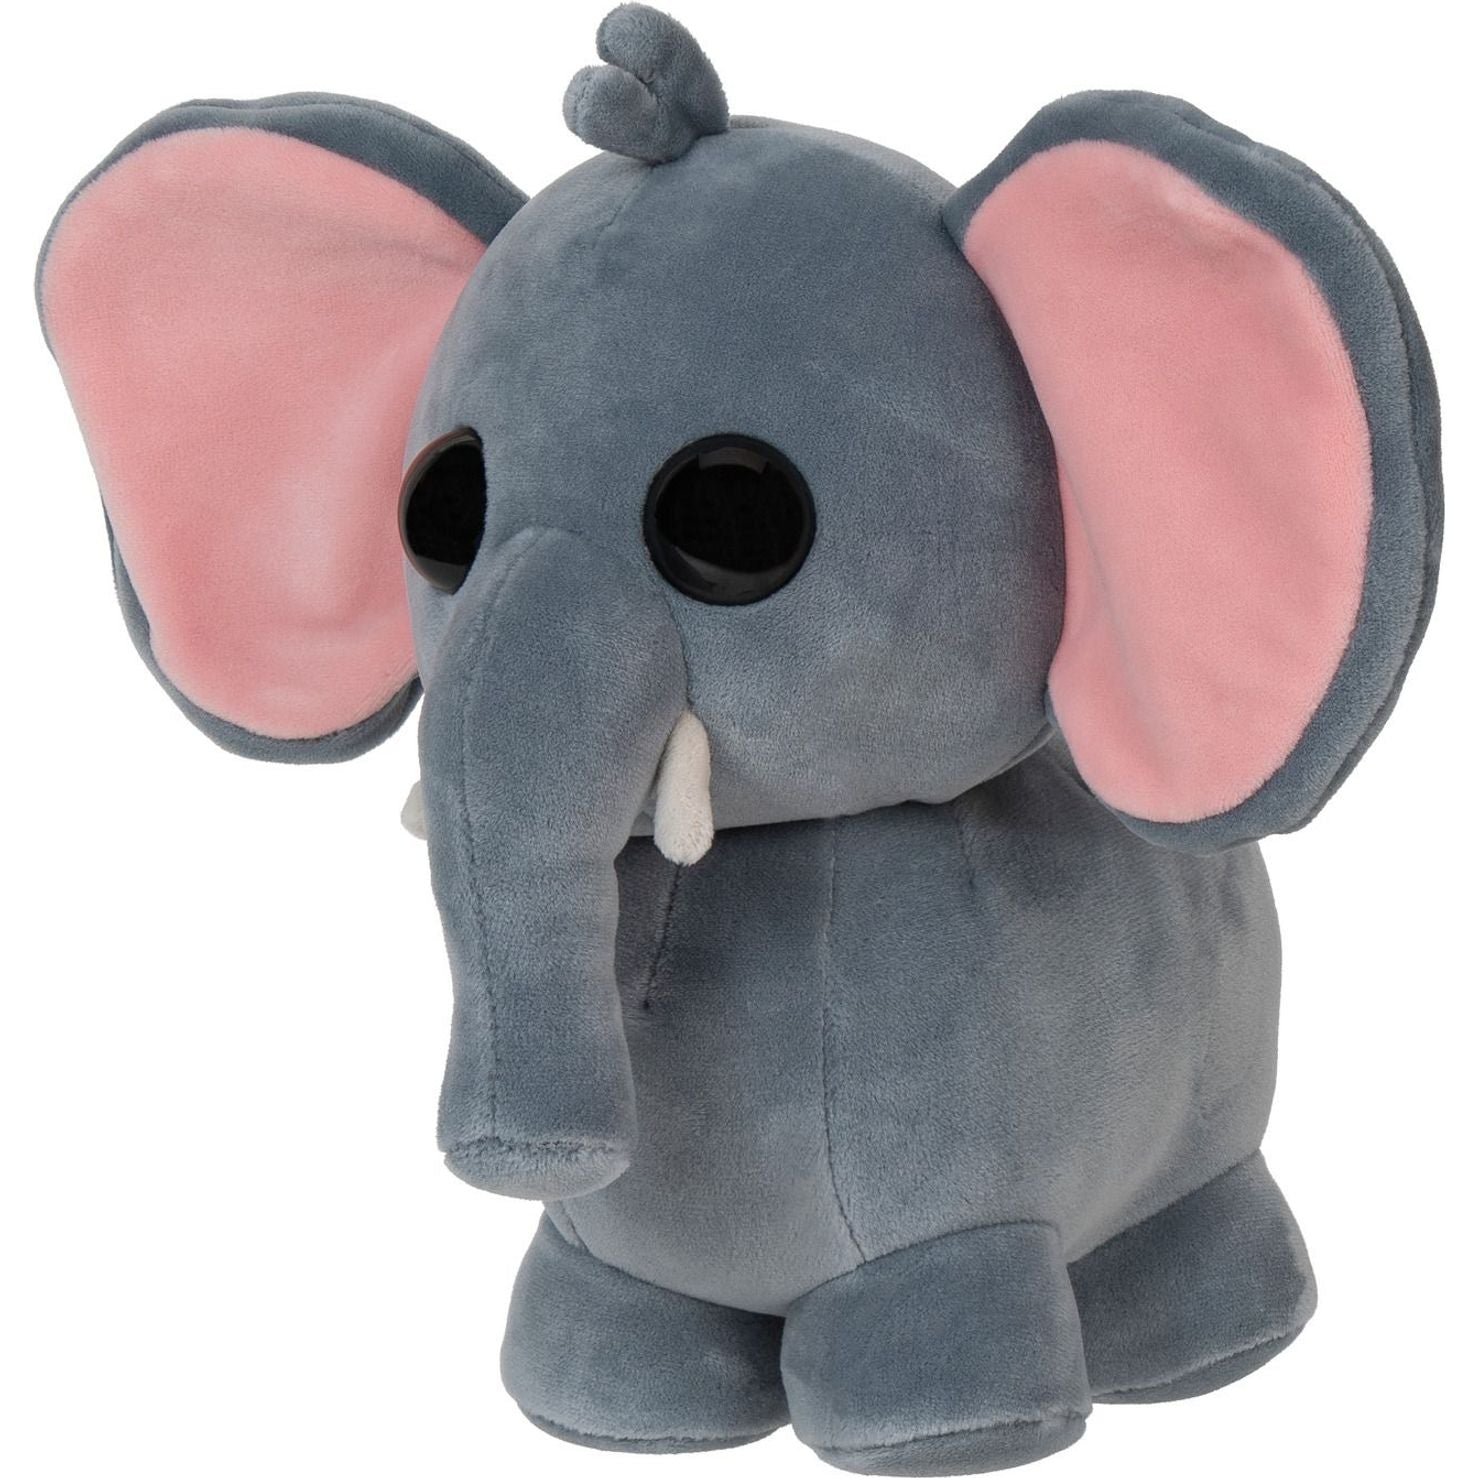 Adopt Me 8" Elephant Collector Plush Adopt Me